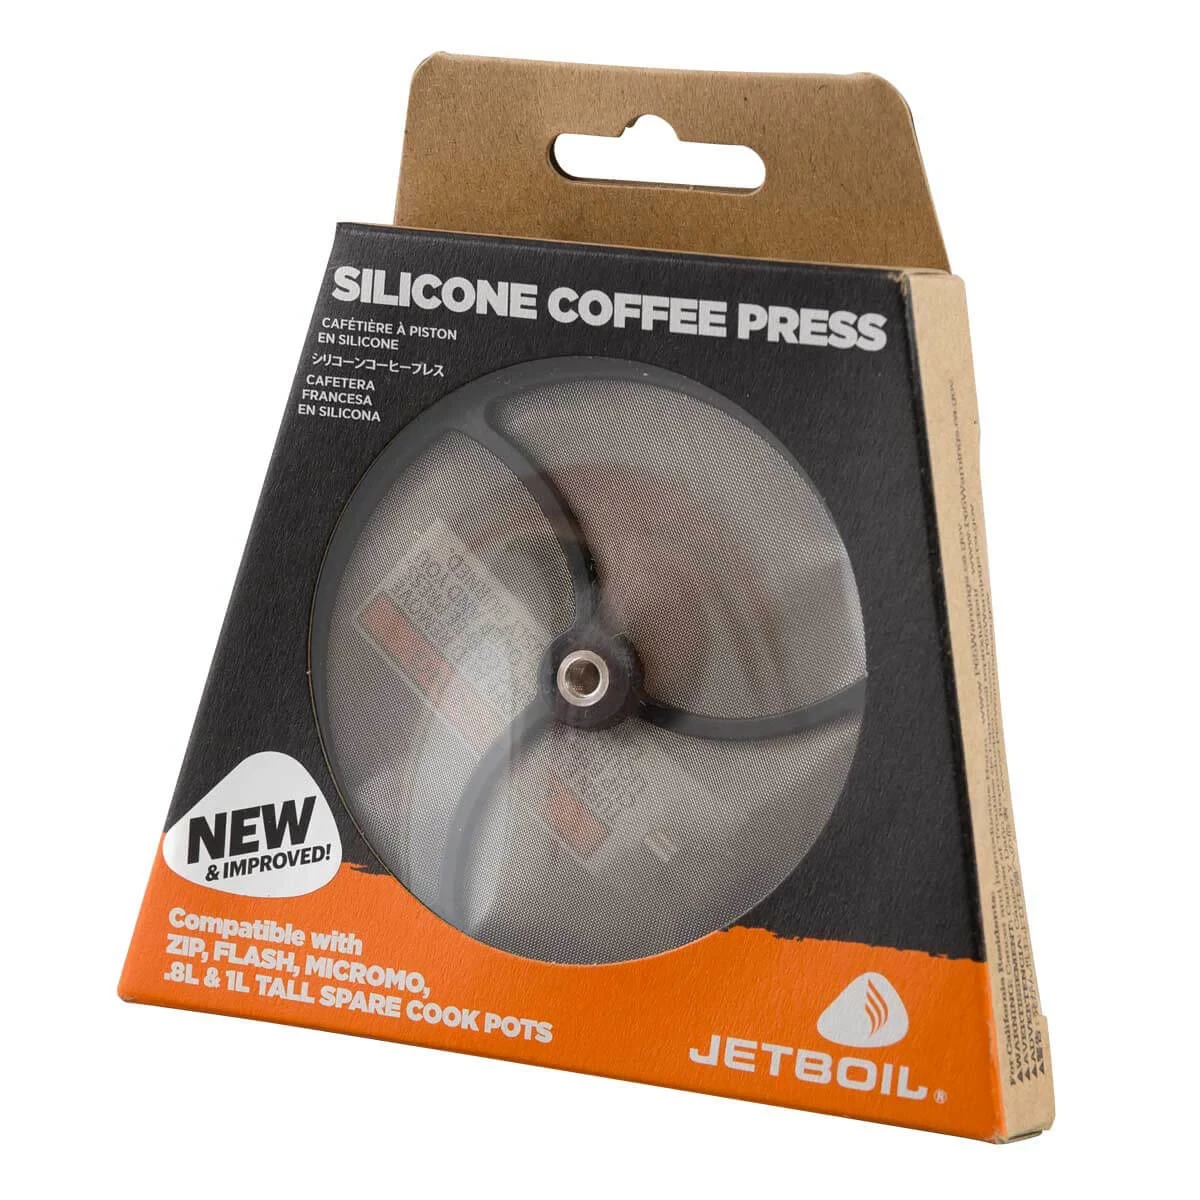 Silicone Coffee Press - Regular in box